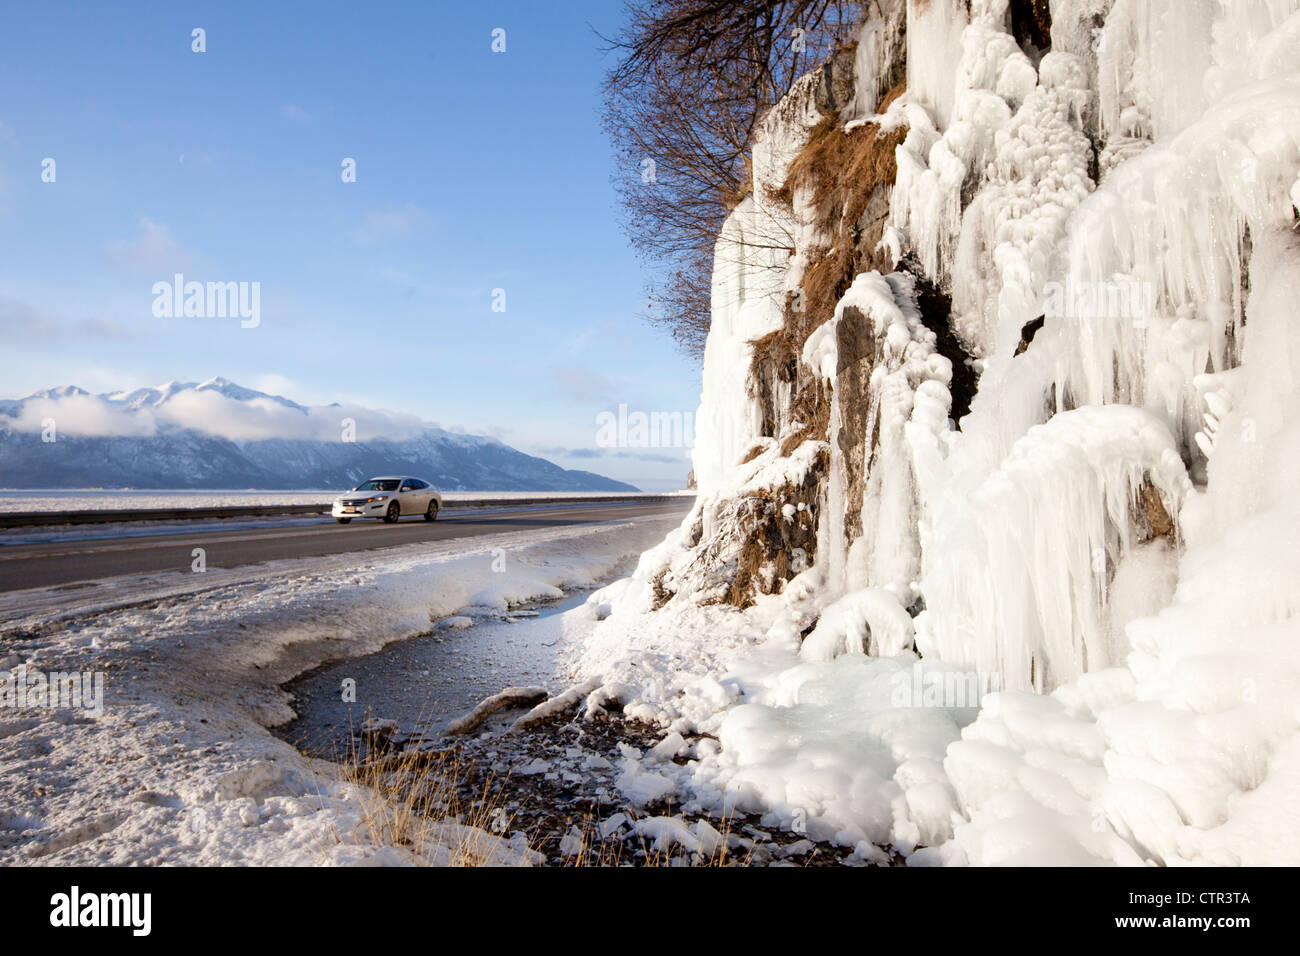 Vehicle passes icy cliffs along Seward Highway, Southcentral Alaska, Winter Stock Photo